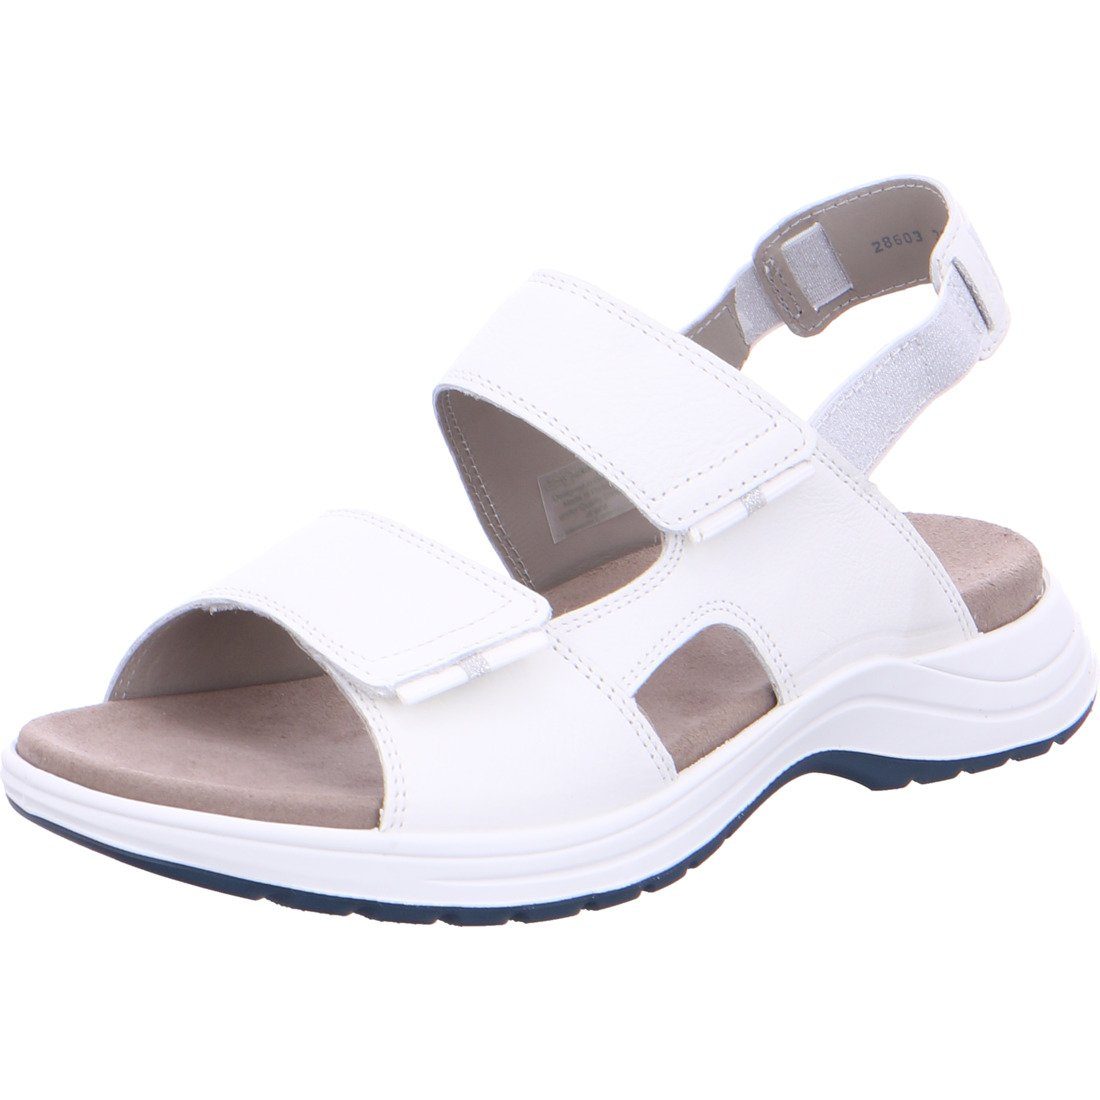 Ara Ara Schuhe, Sandalette - Panama weiß Sandalette Glattleder 042411